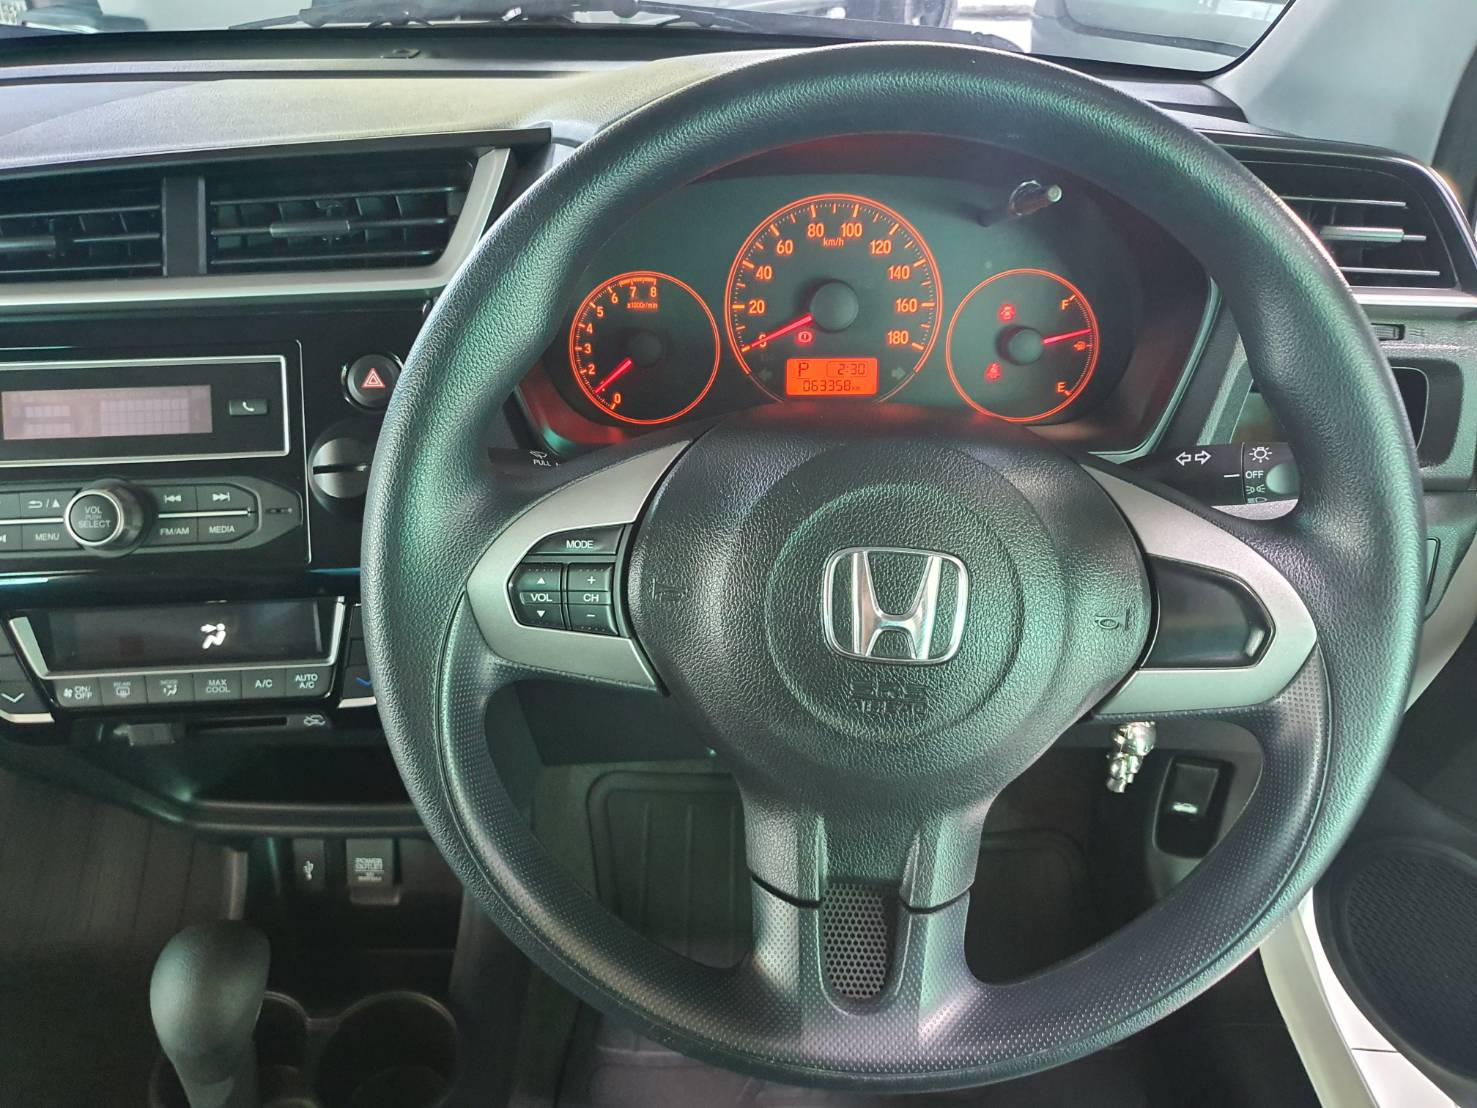 Honda Brio 1.2V Auto ปี2019 สีขาว minor change แล้ว